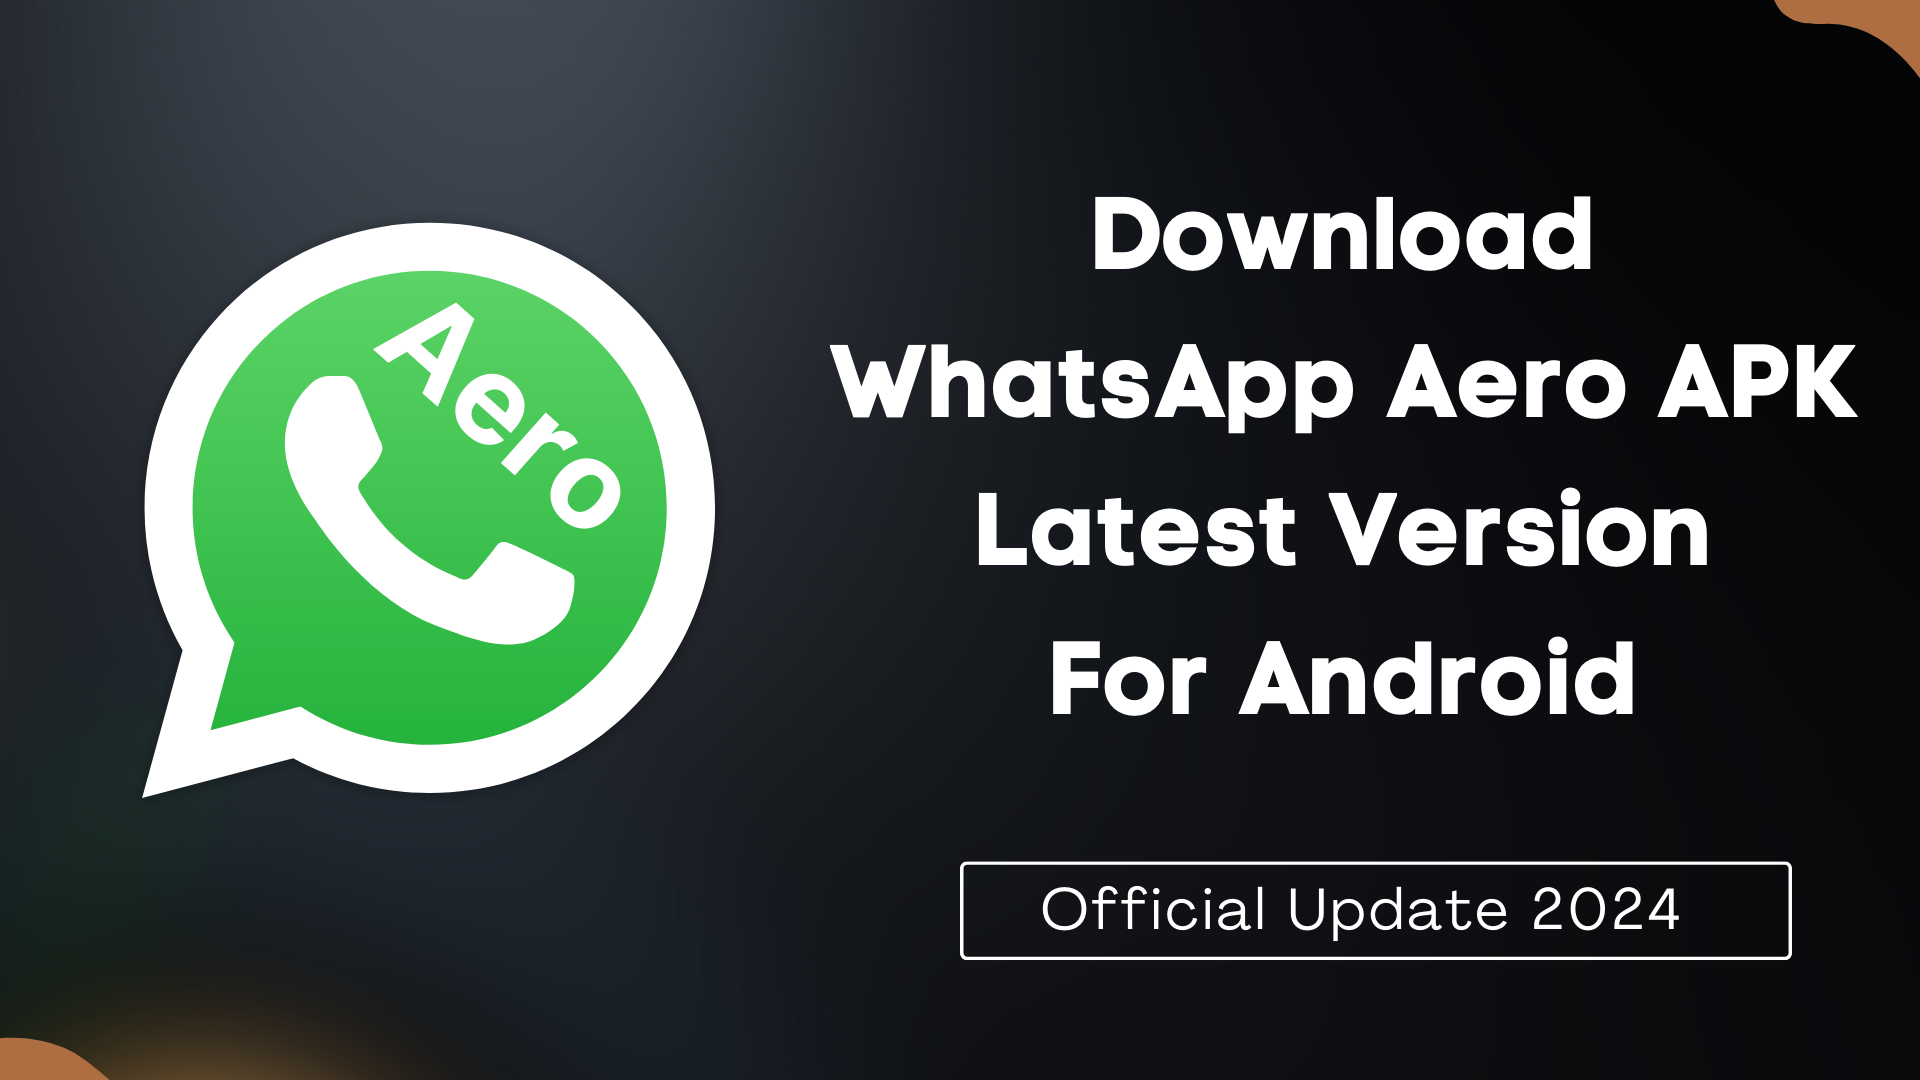 WhatsApp Aero APK Featured Image 2024